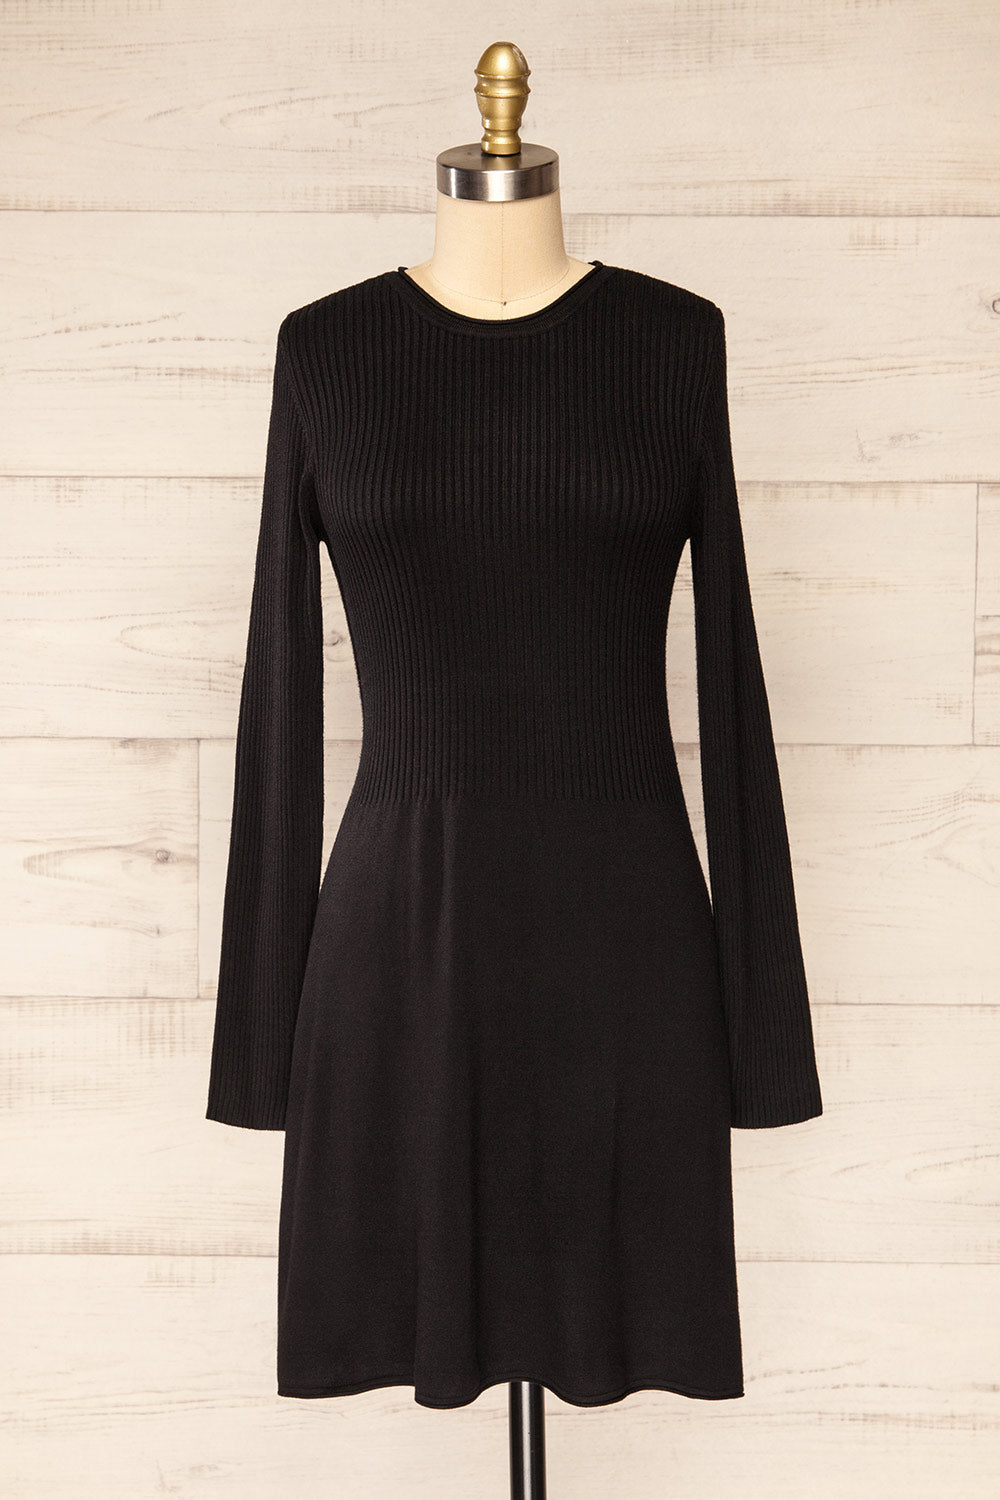 Gitega Short Rib-Knit Black Dress w/ Long Sleeves | La petite garçonne front view